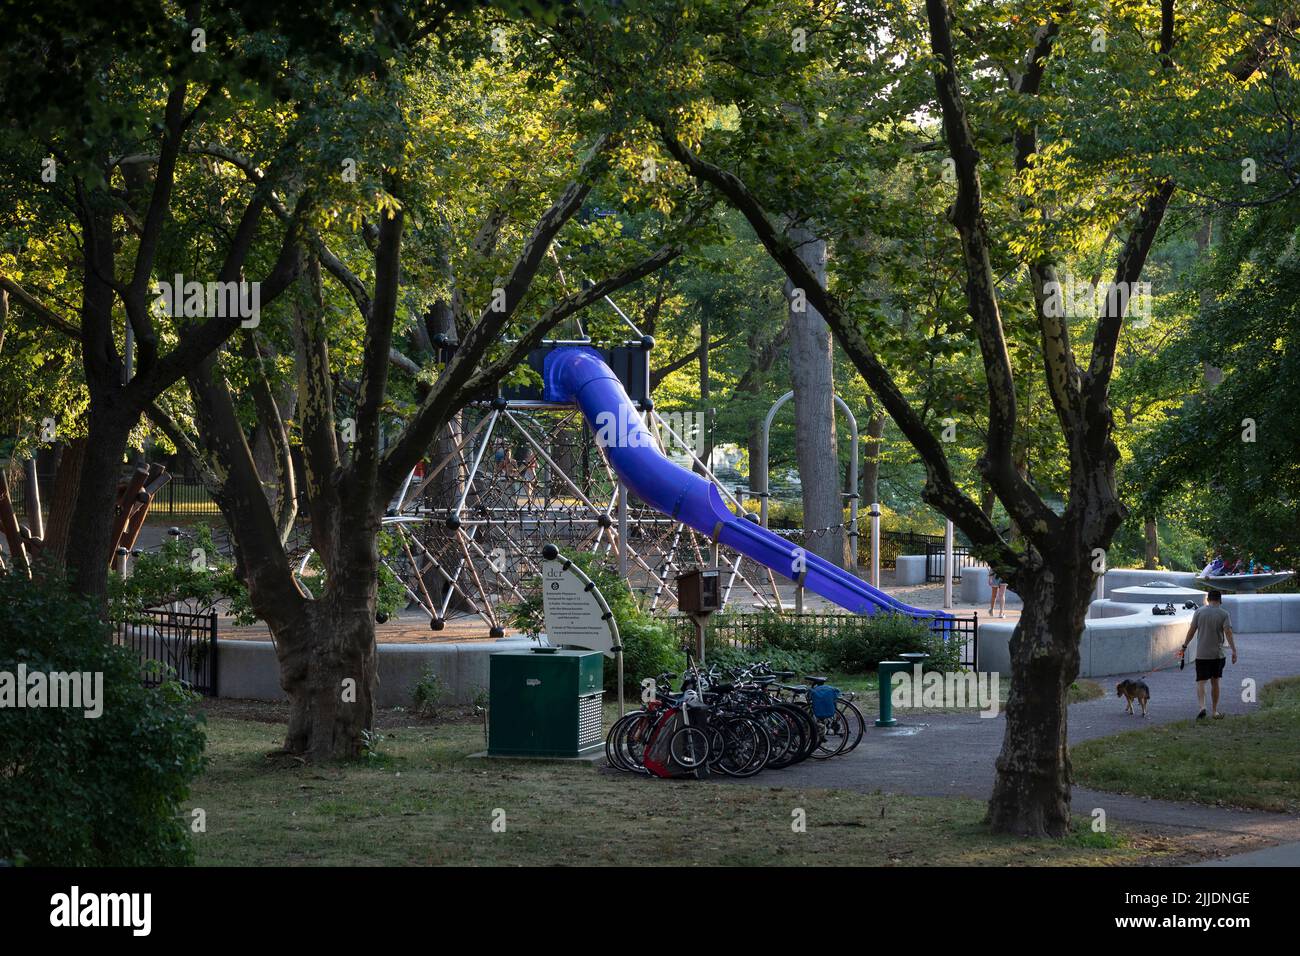 Parque infantil con estructura de escalada, Esplanade, Boston, Massachusetts Foto de stock